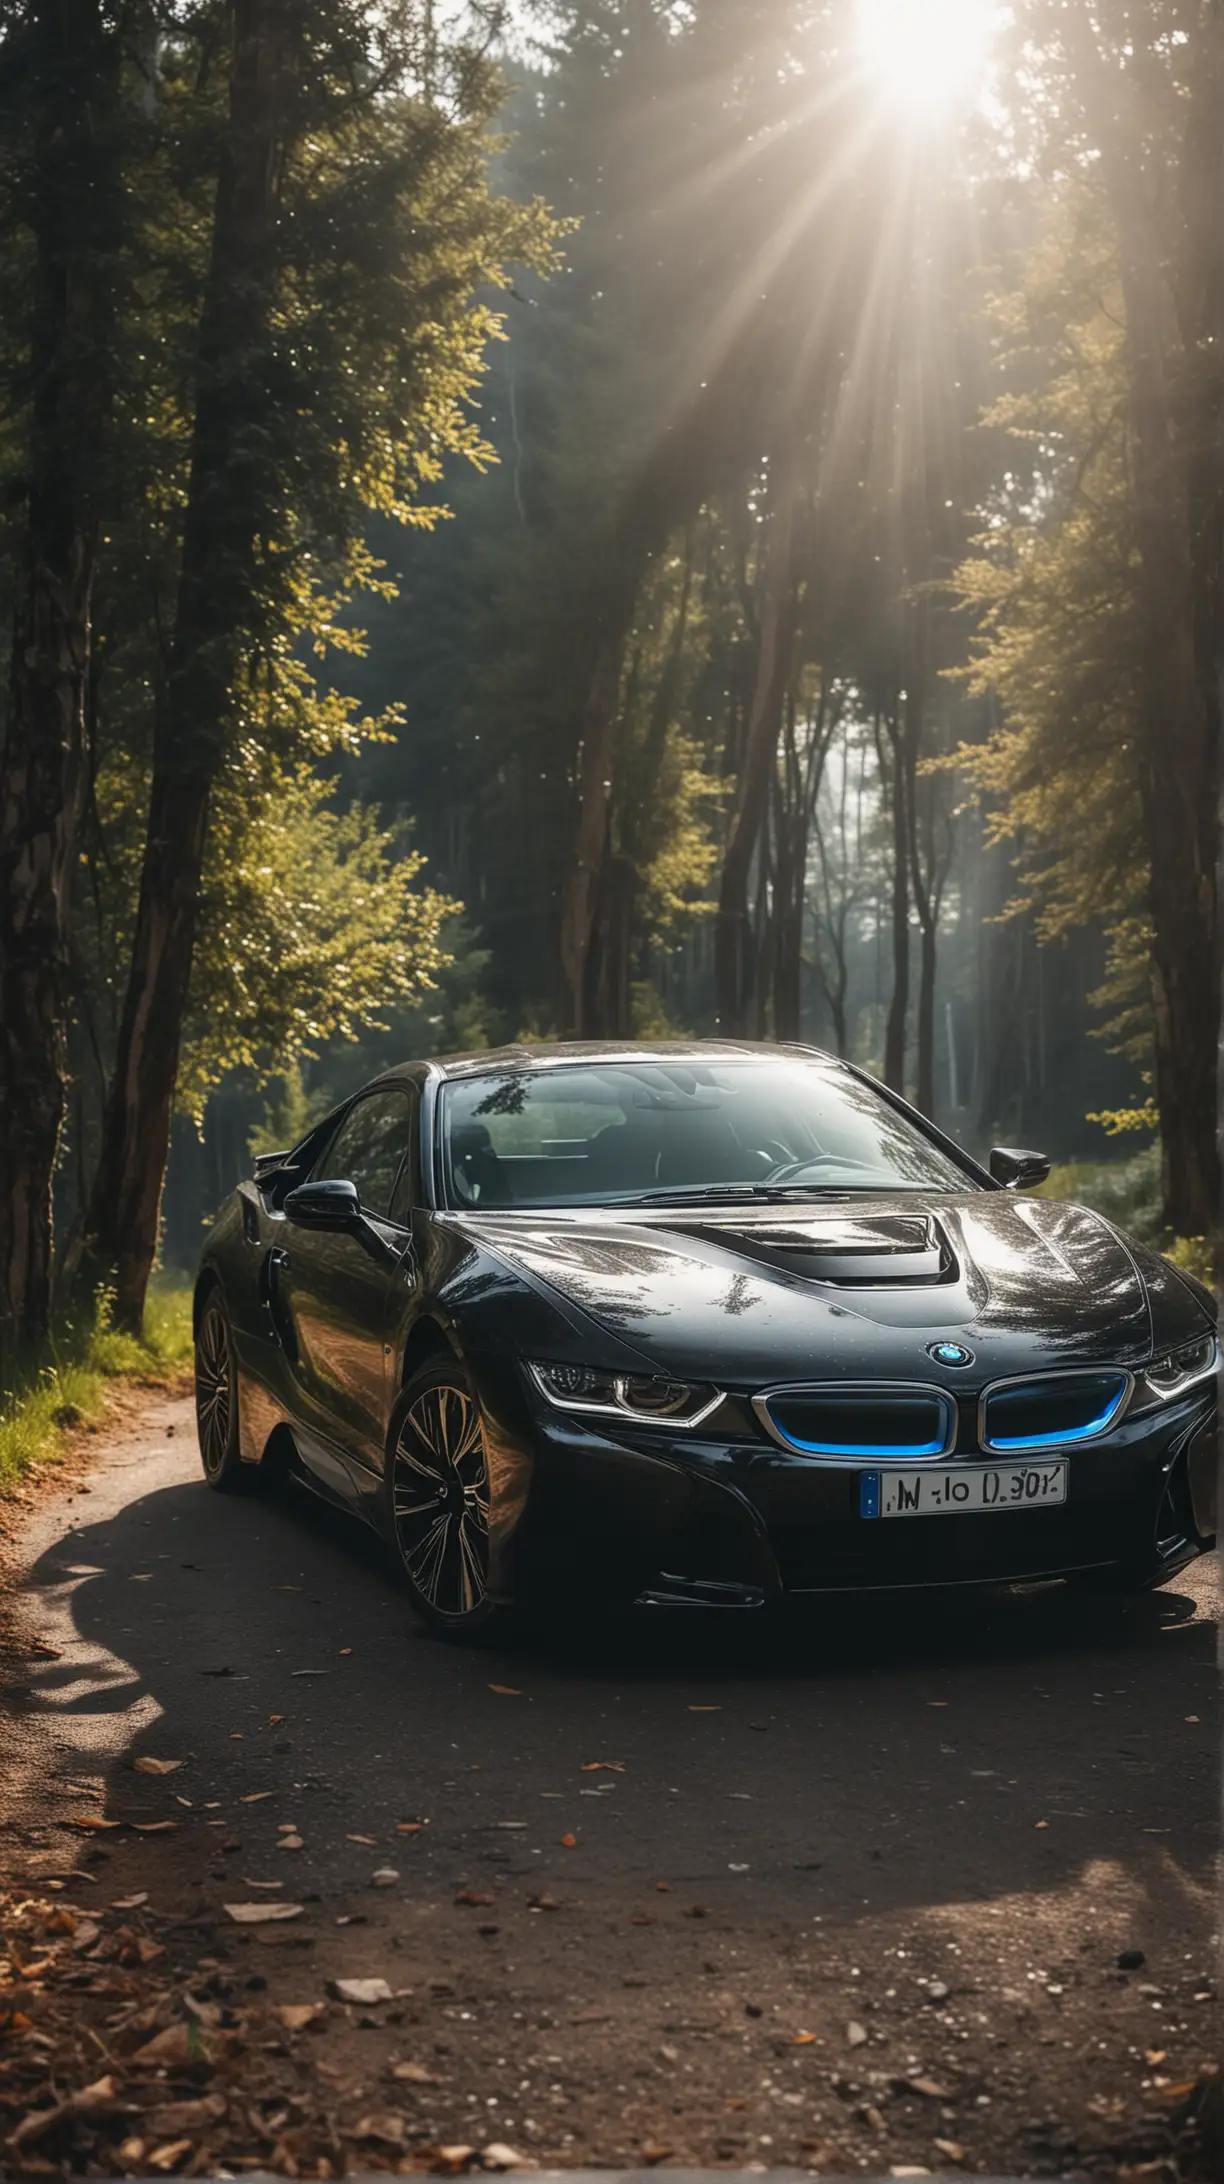 Sleek Black BMW i8 with Headlights On Amidst Scenic Nature